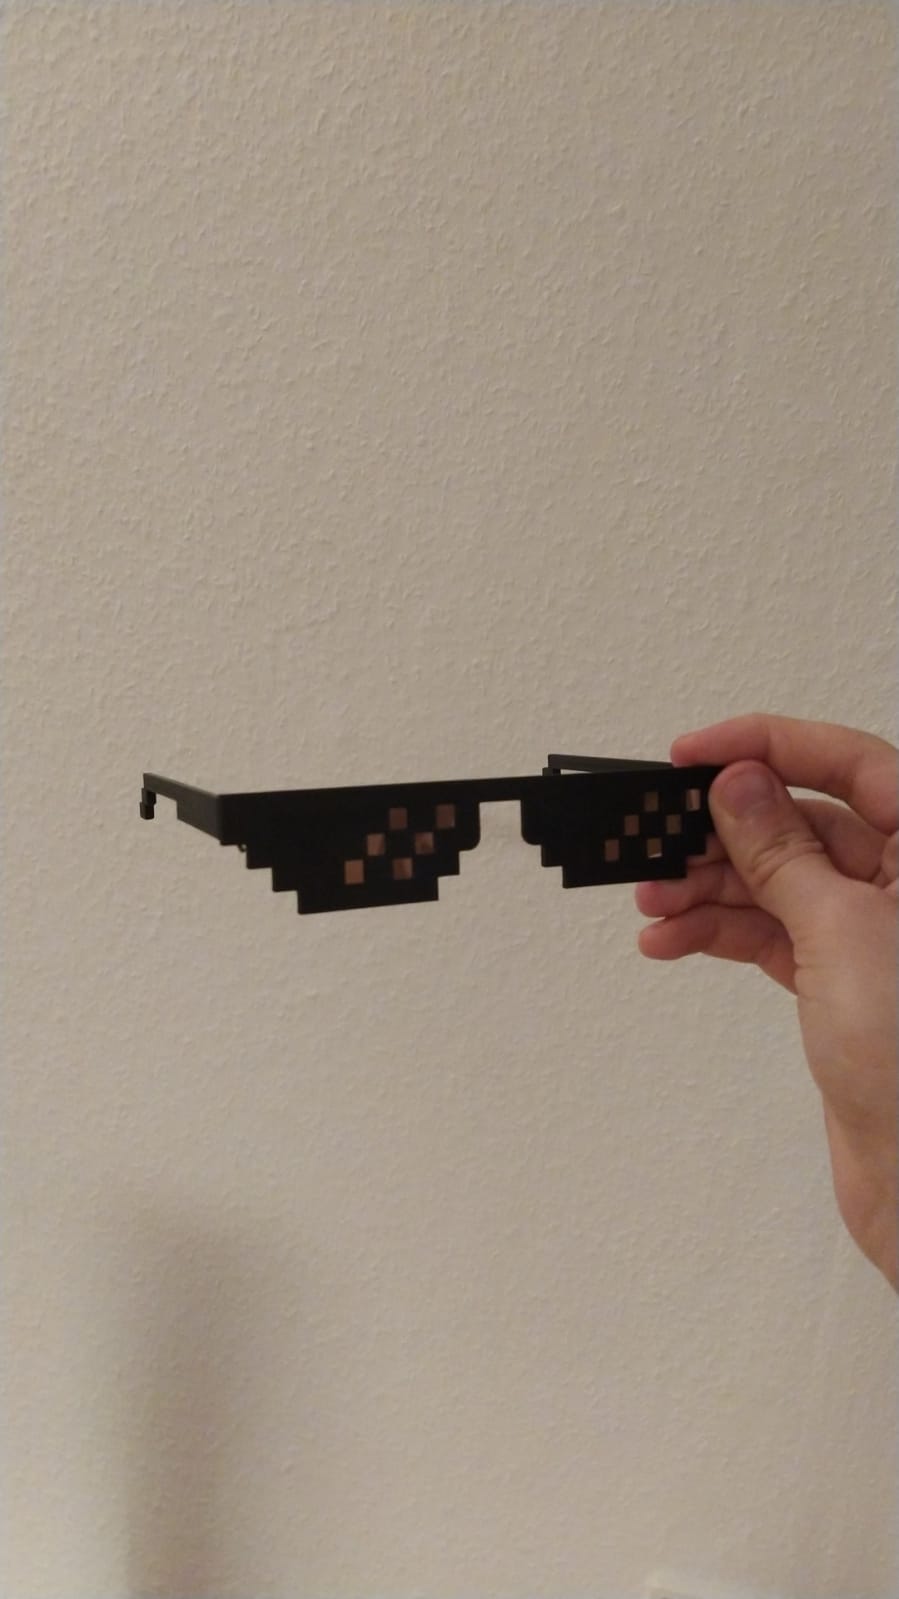 Meme Sunglasses